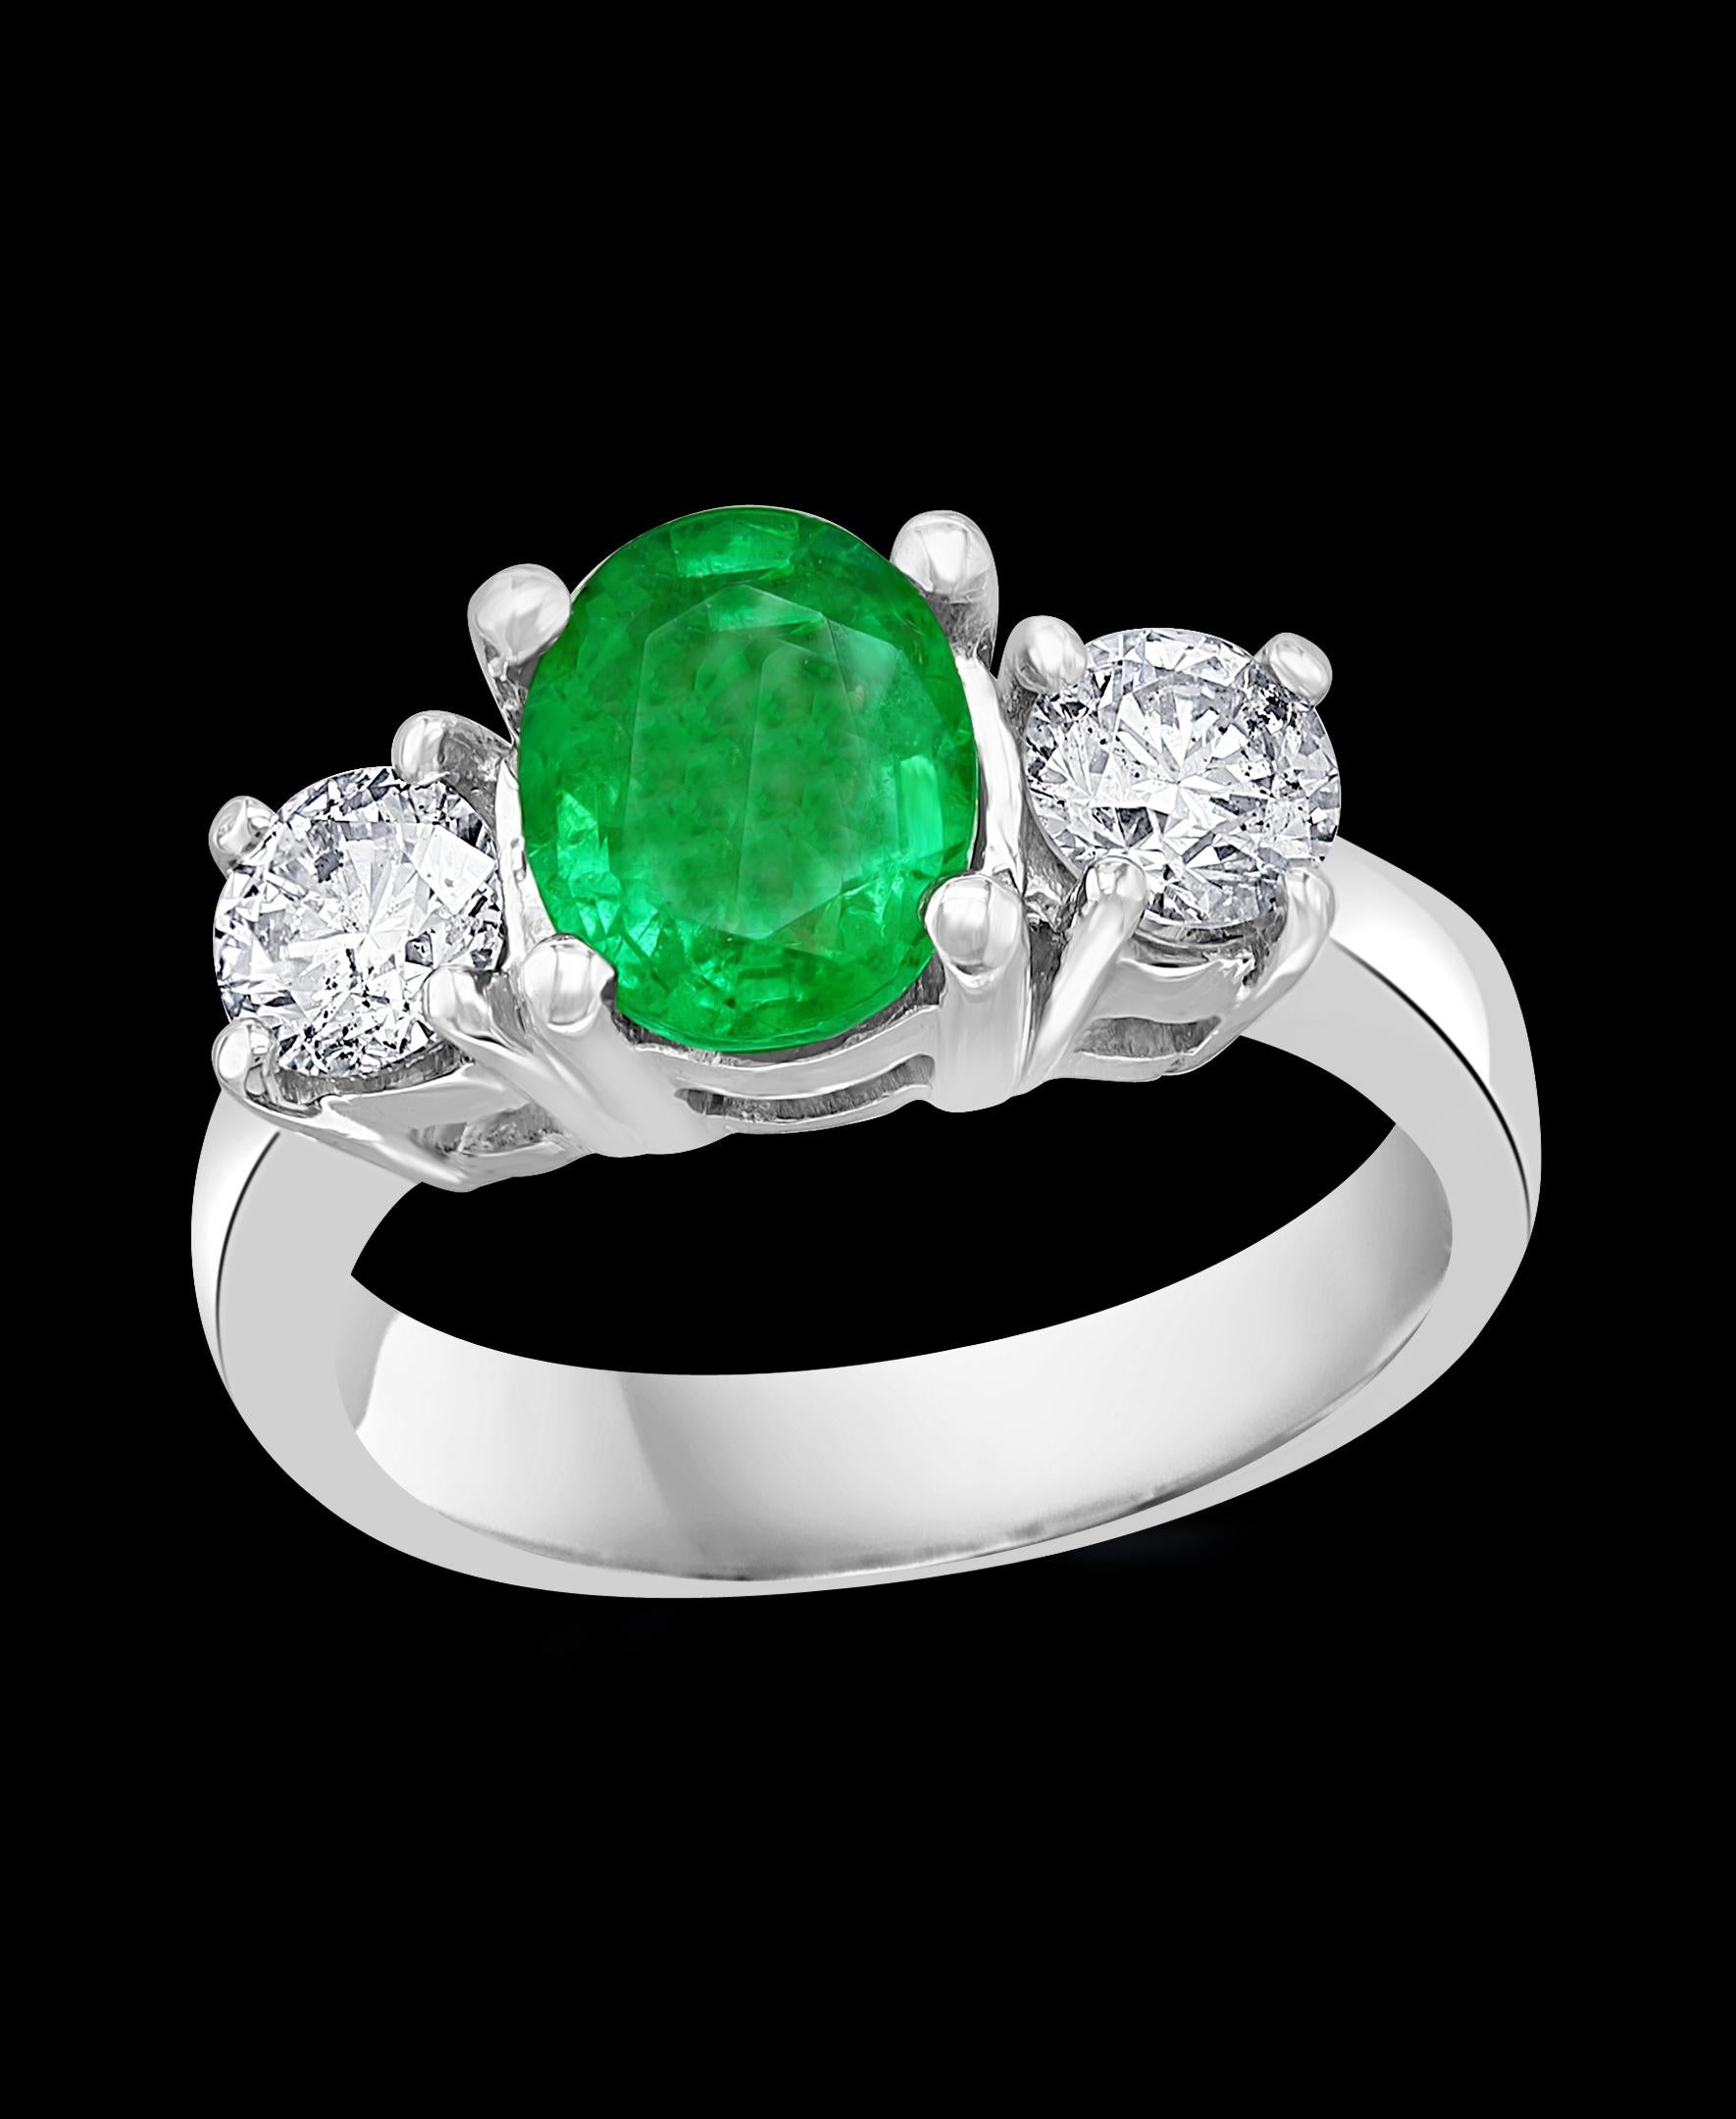 1.8 Carat Oval Cut Emerald & 0.90 Ct Diamond Ring in Platinum 4